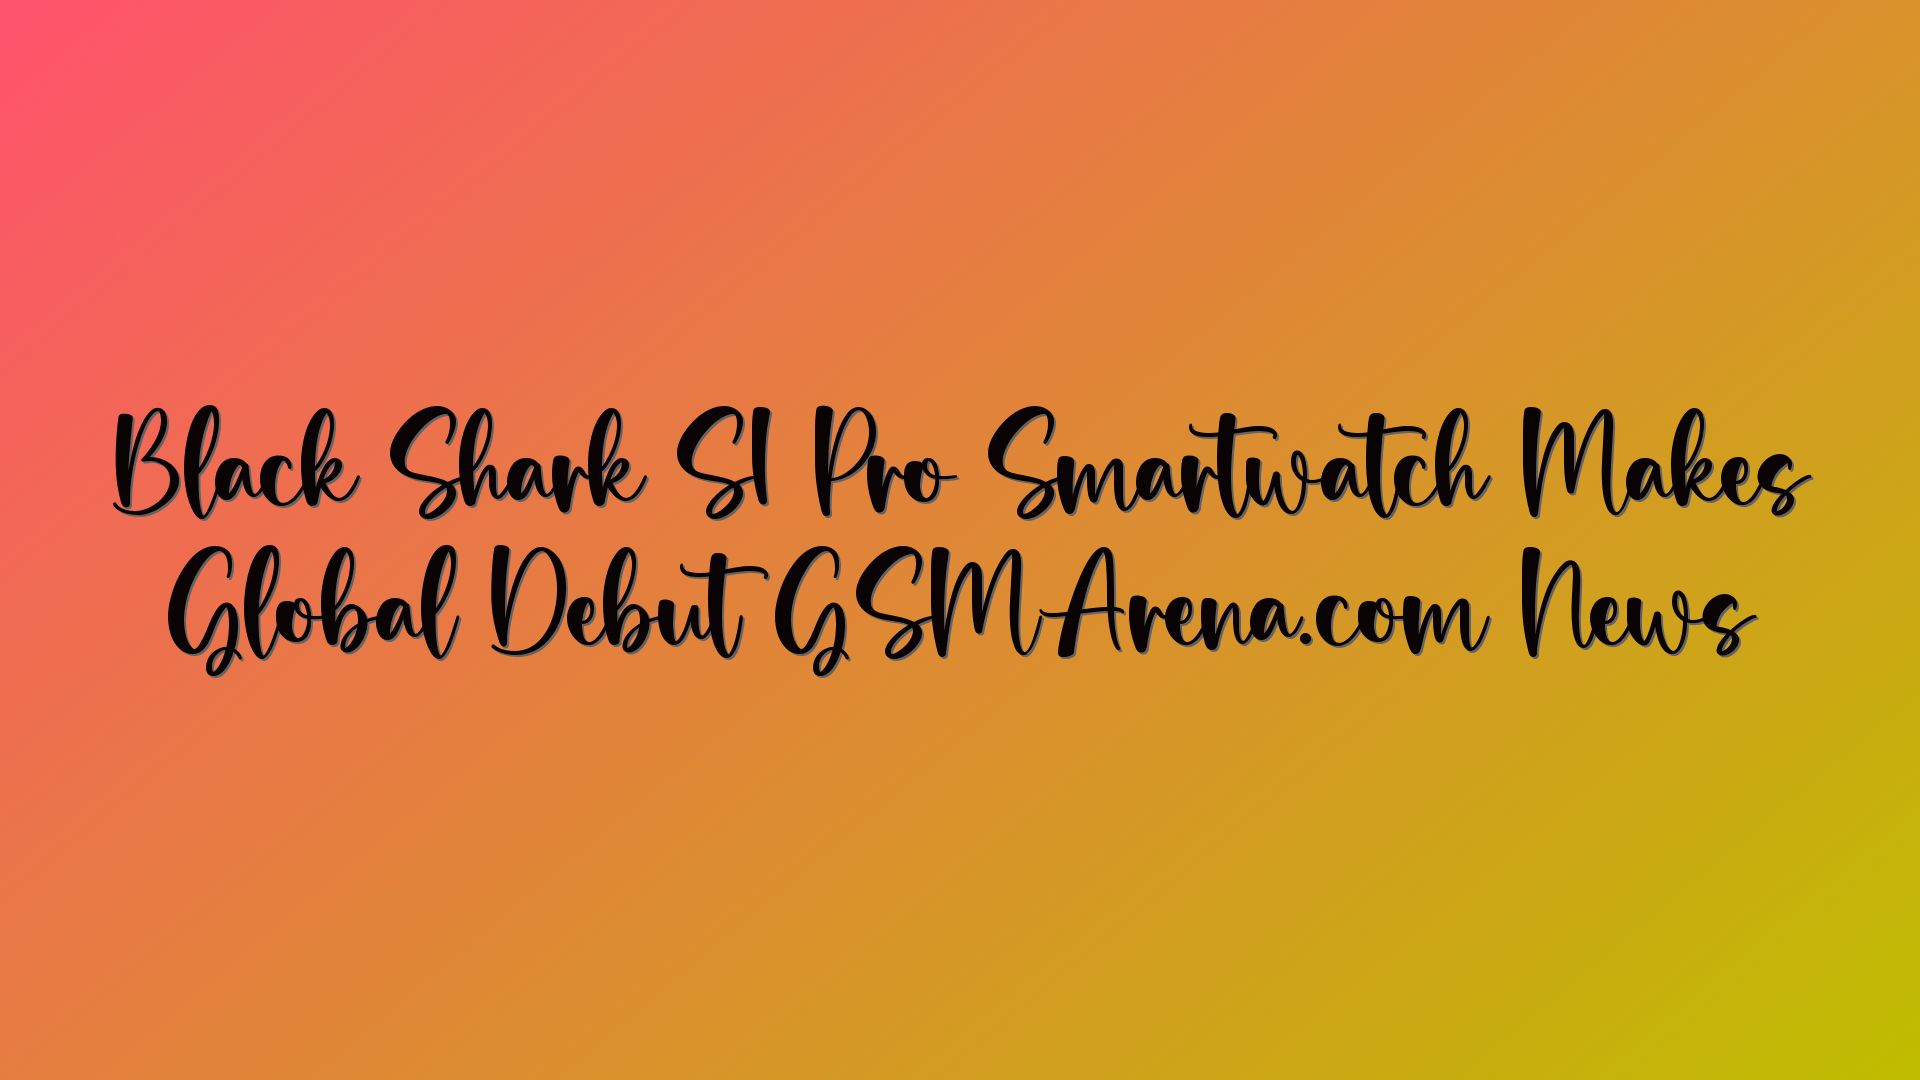 Black Shark S1 Pro Smartwatch Makes Global Debut GSMArena.com News